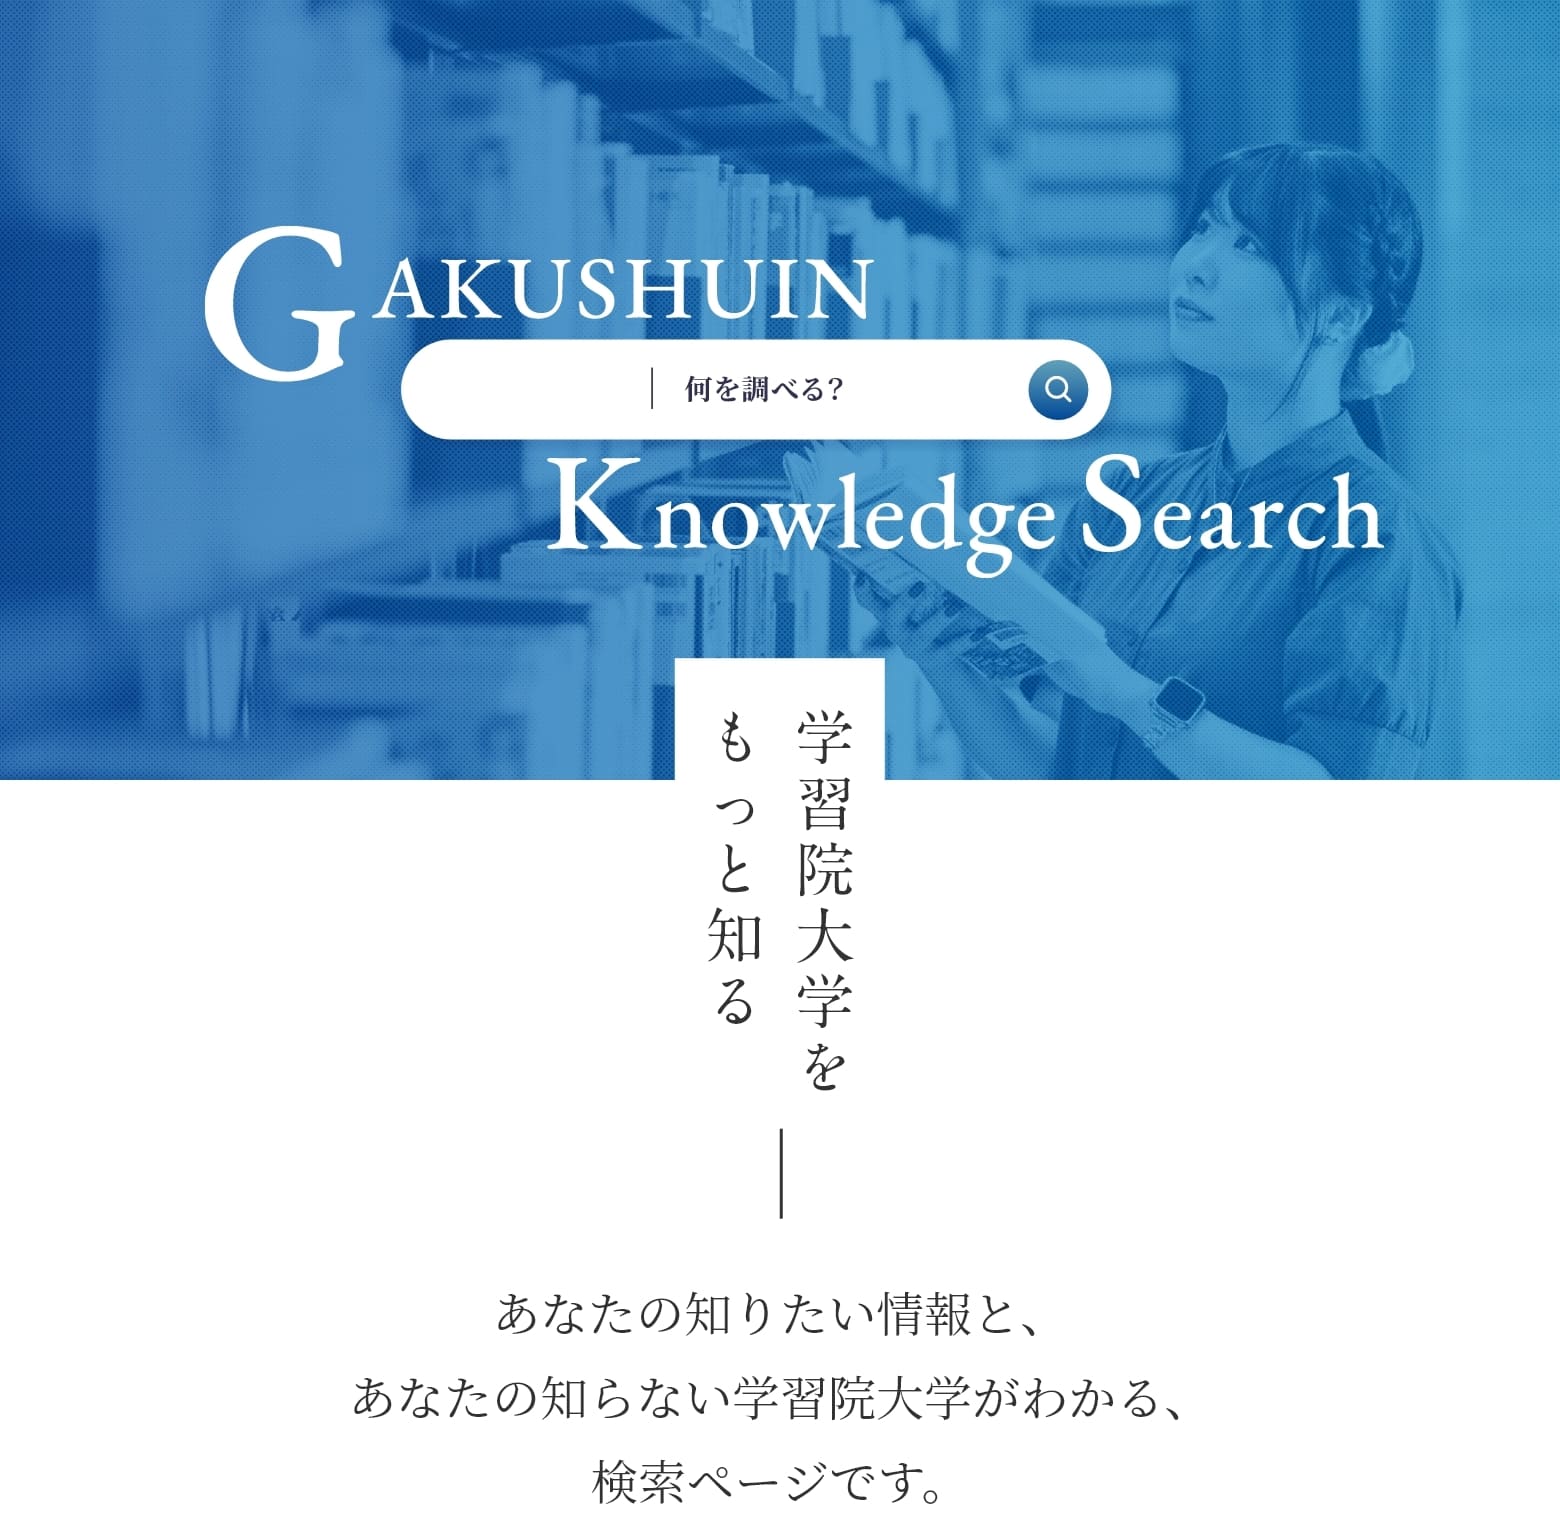 GAKUSHUIN Knowledge Search